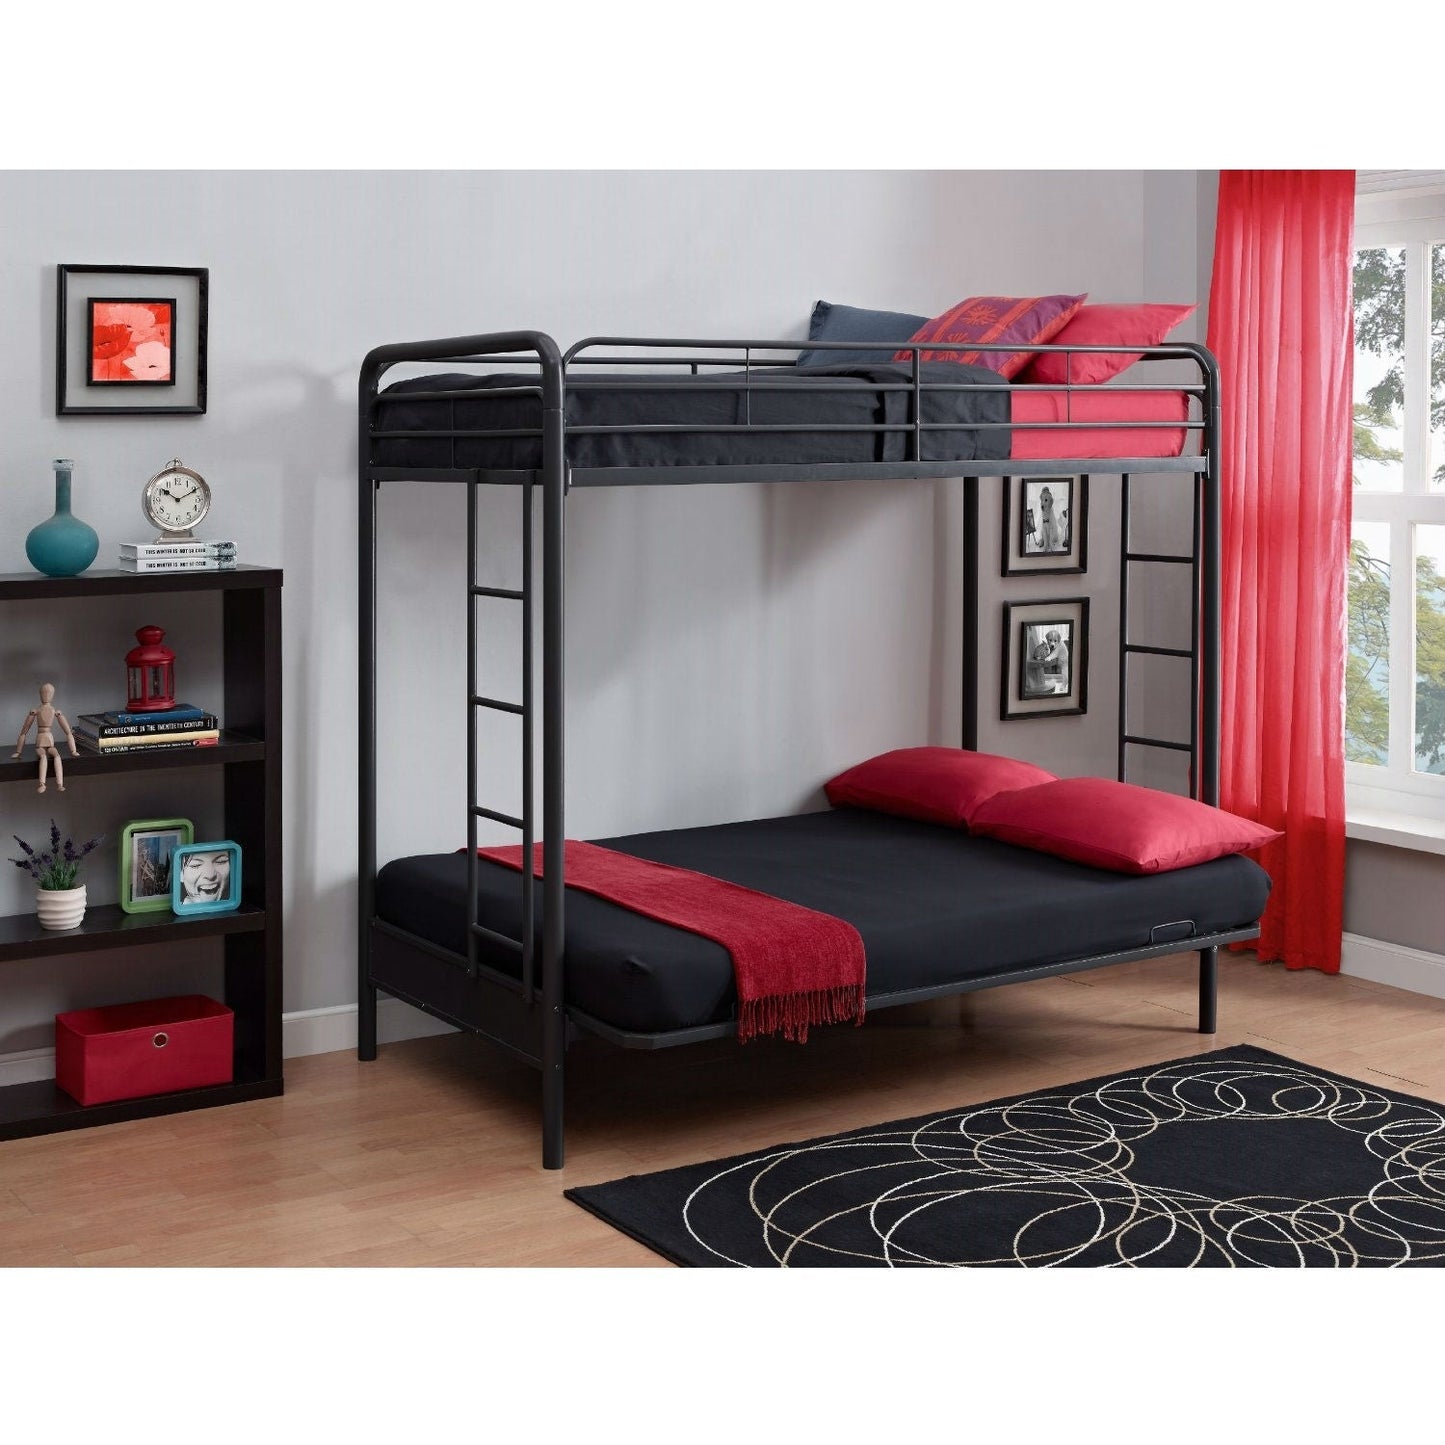 Bedroom > Bed Frames > Bunk Beds - Twin Over Full Futon Bunk Bed Sleeper Sofa In Black Metal